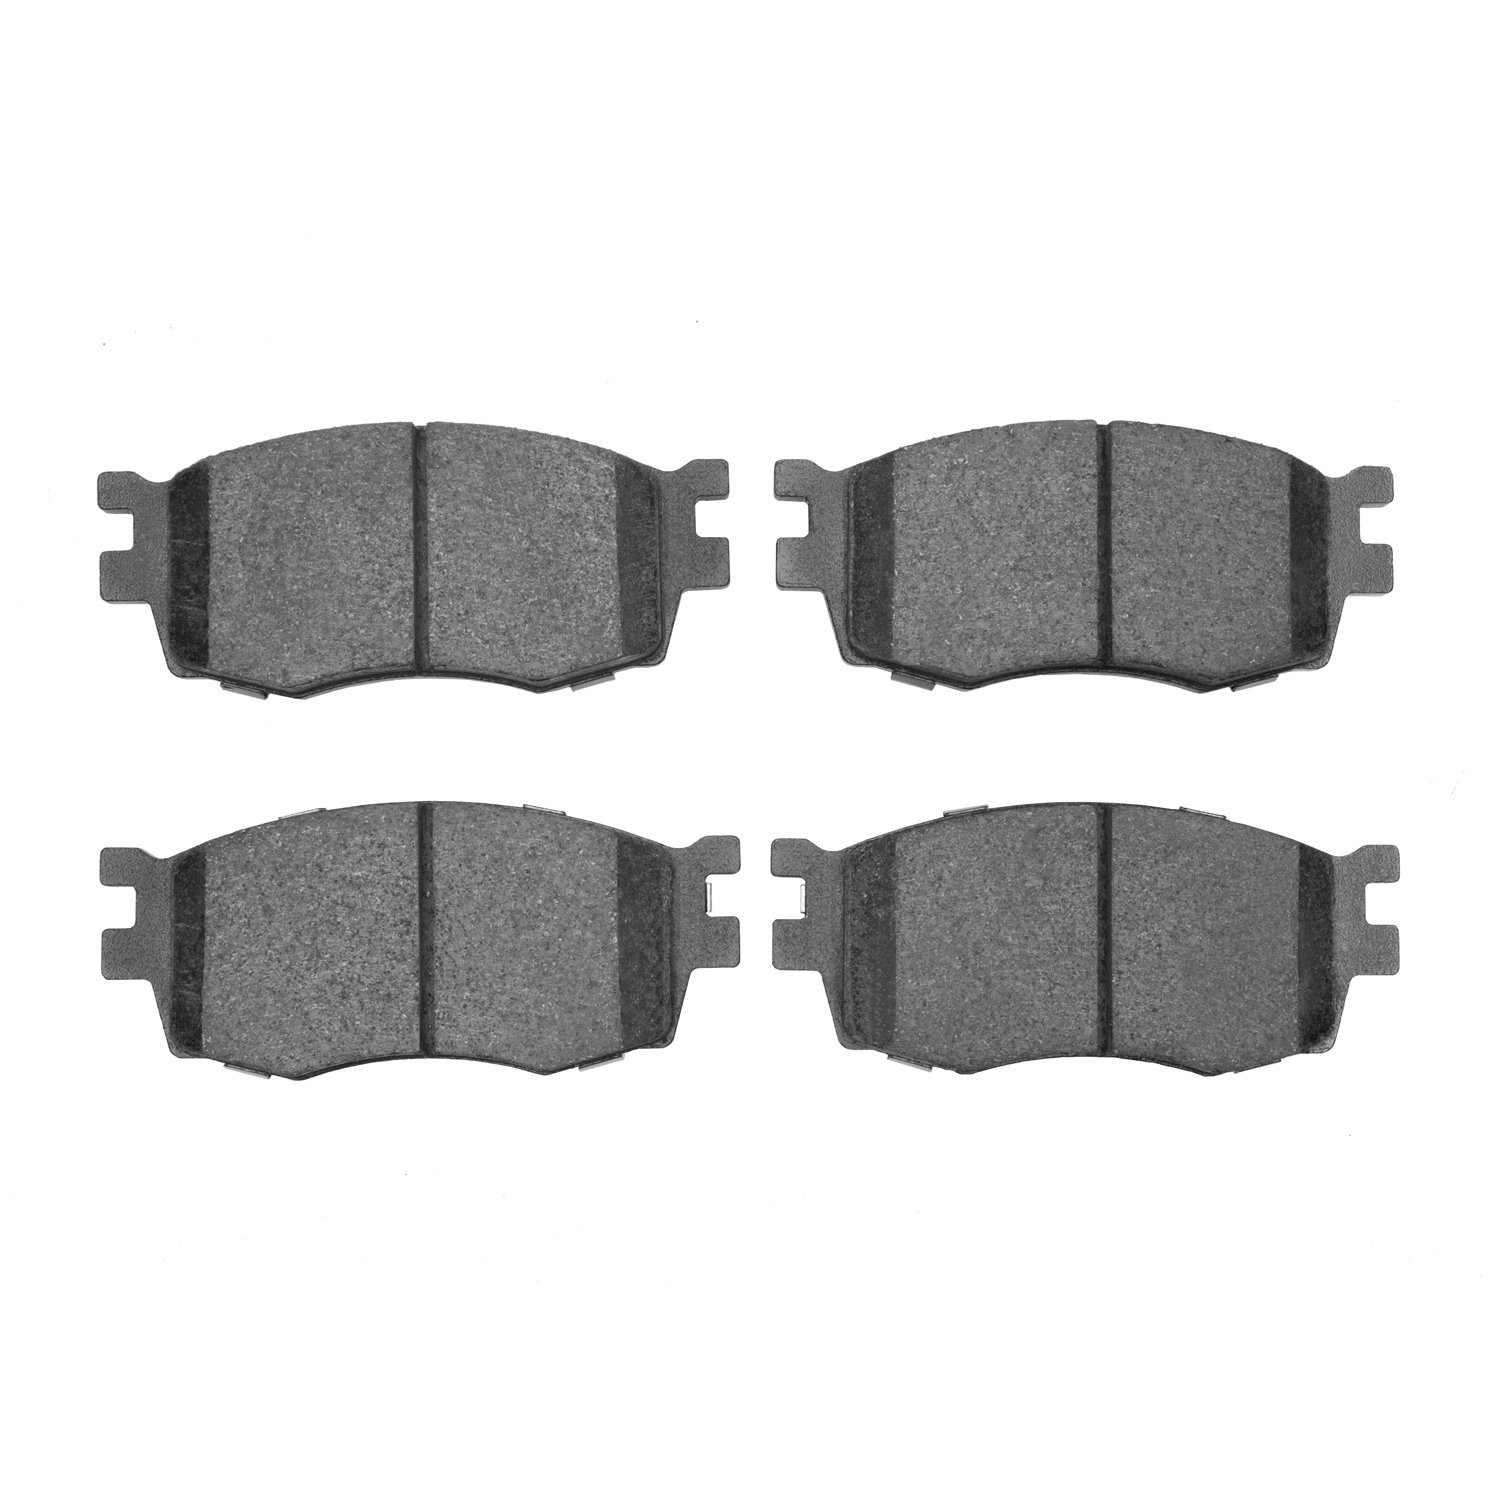 1310-1156-00 3000-Series Ceramic Brake Pads, 2006-2012 Multiple Makes/Models, Position: Front